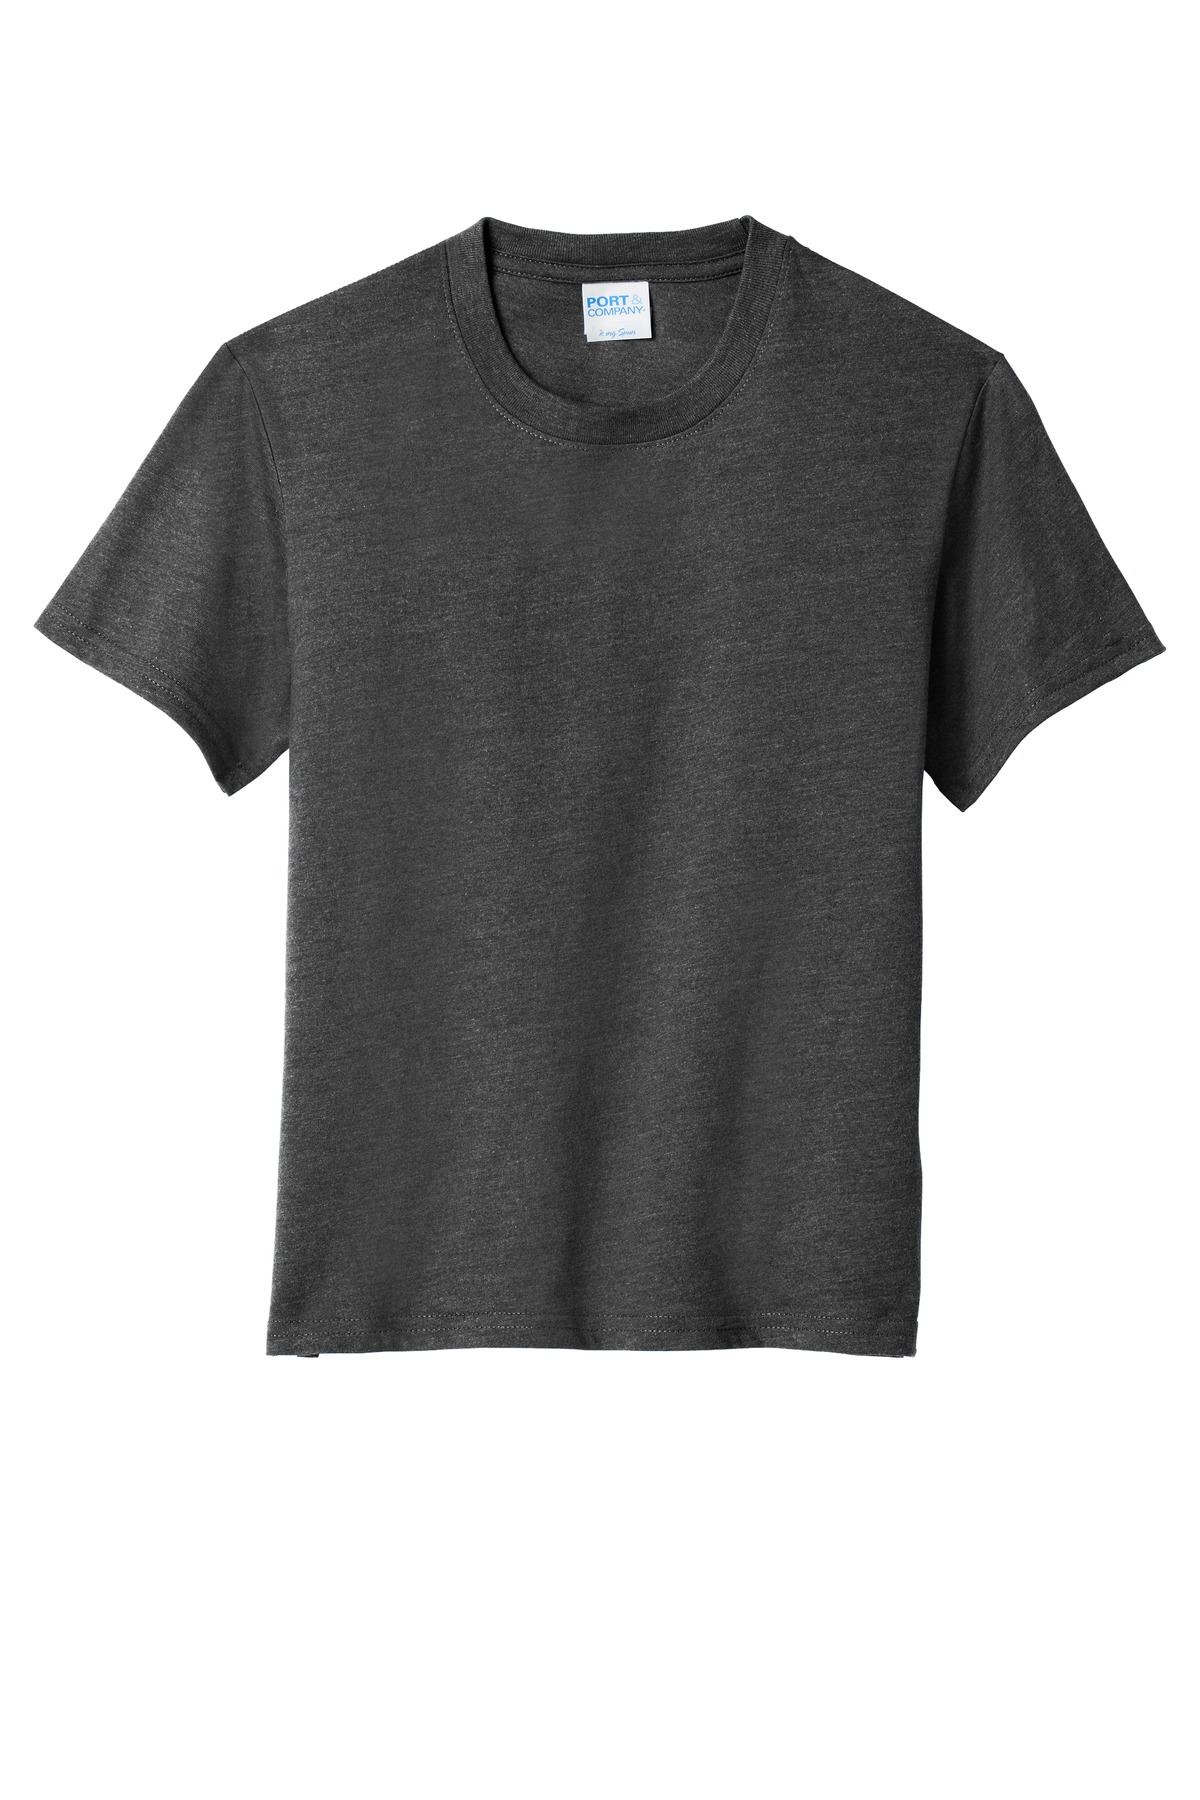 Port & Company Youth Fan Favorite Blend T-Shirt - PC455Y